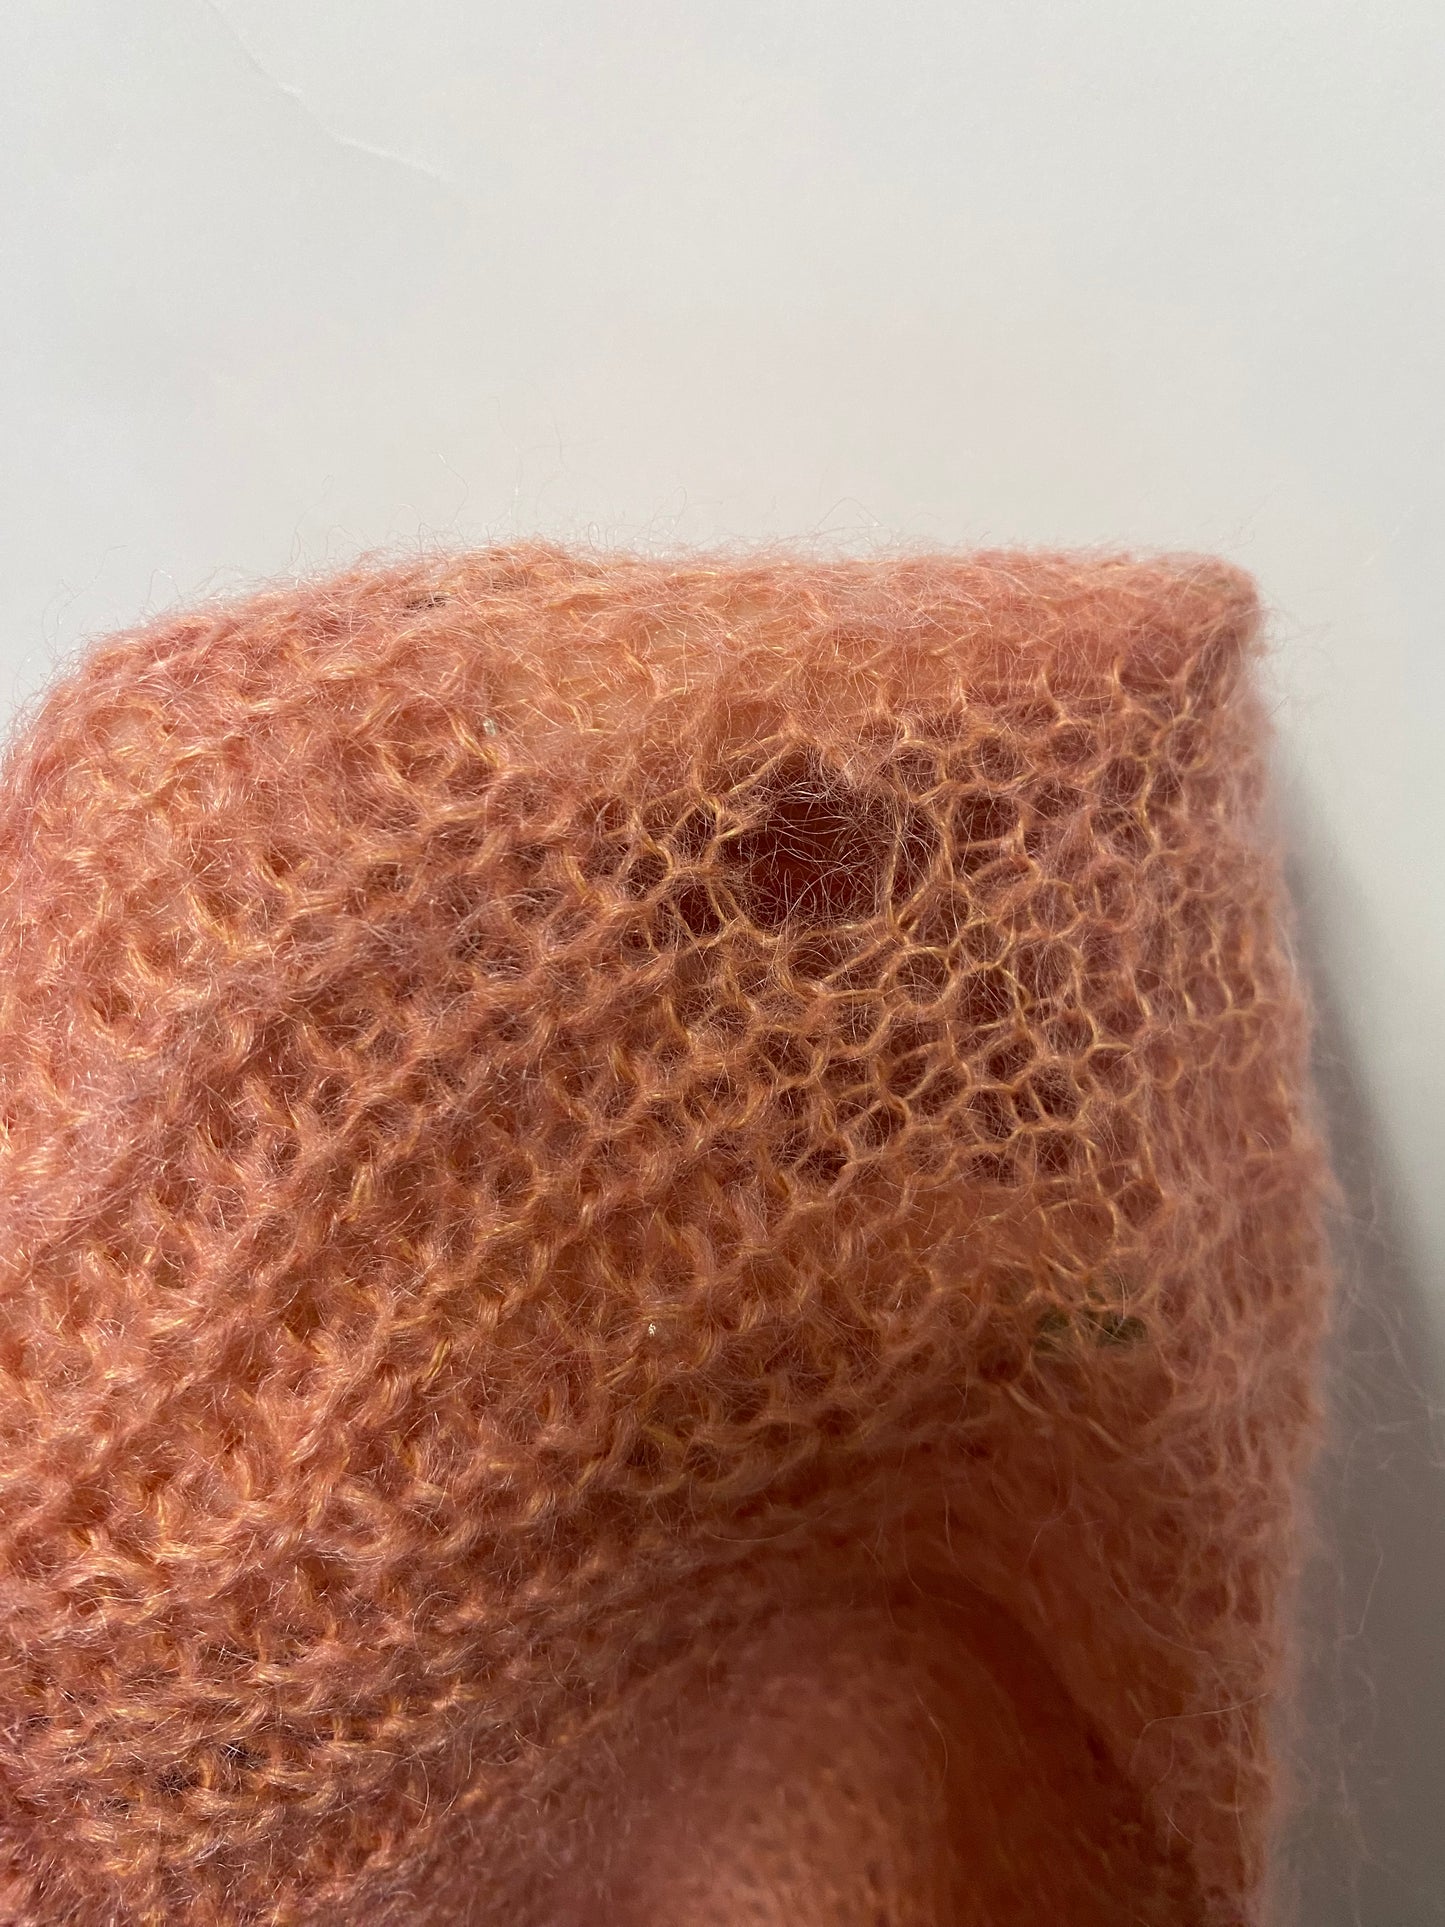 IIMK Michel Klein Pale Pink Crochet Soft Knit Jumper 10